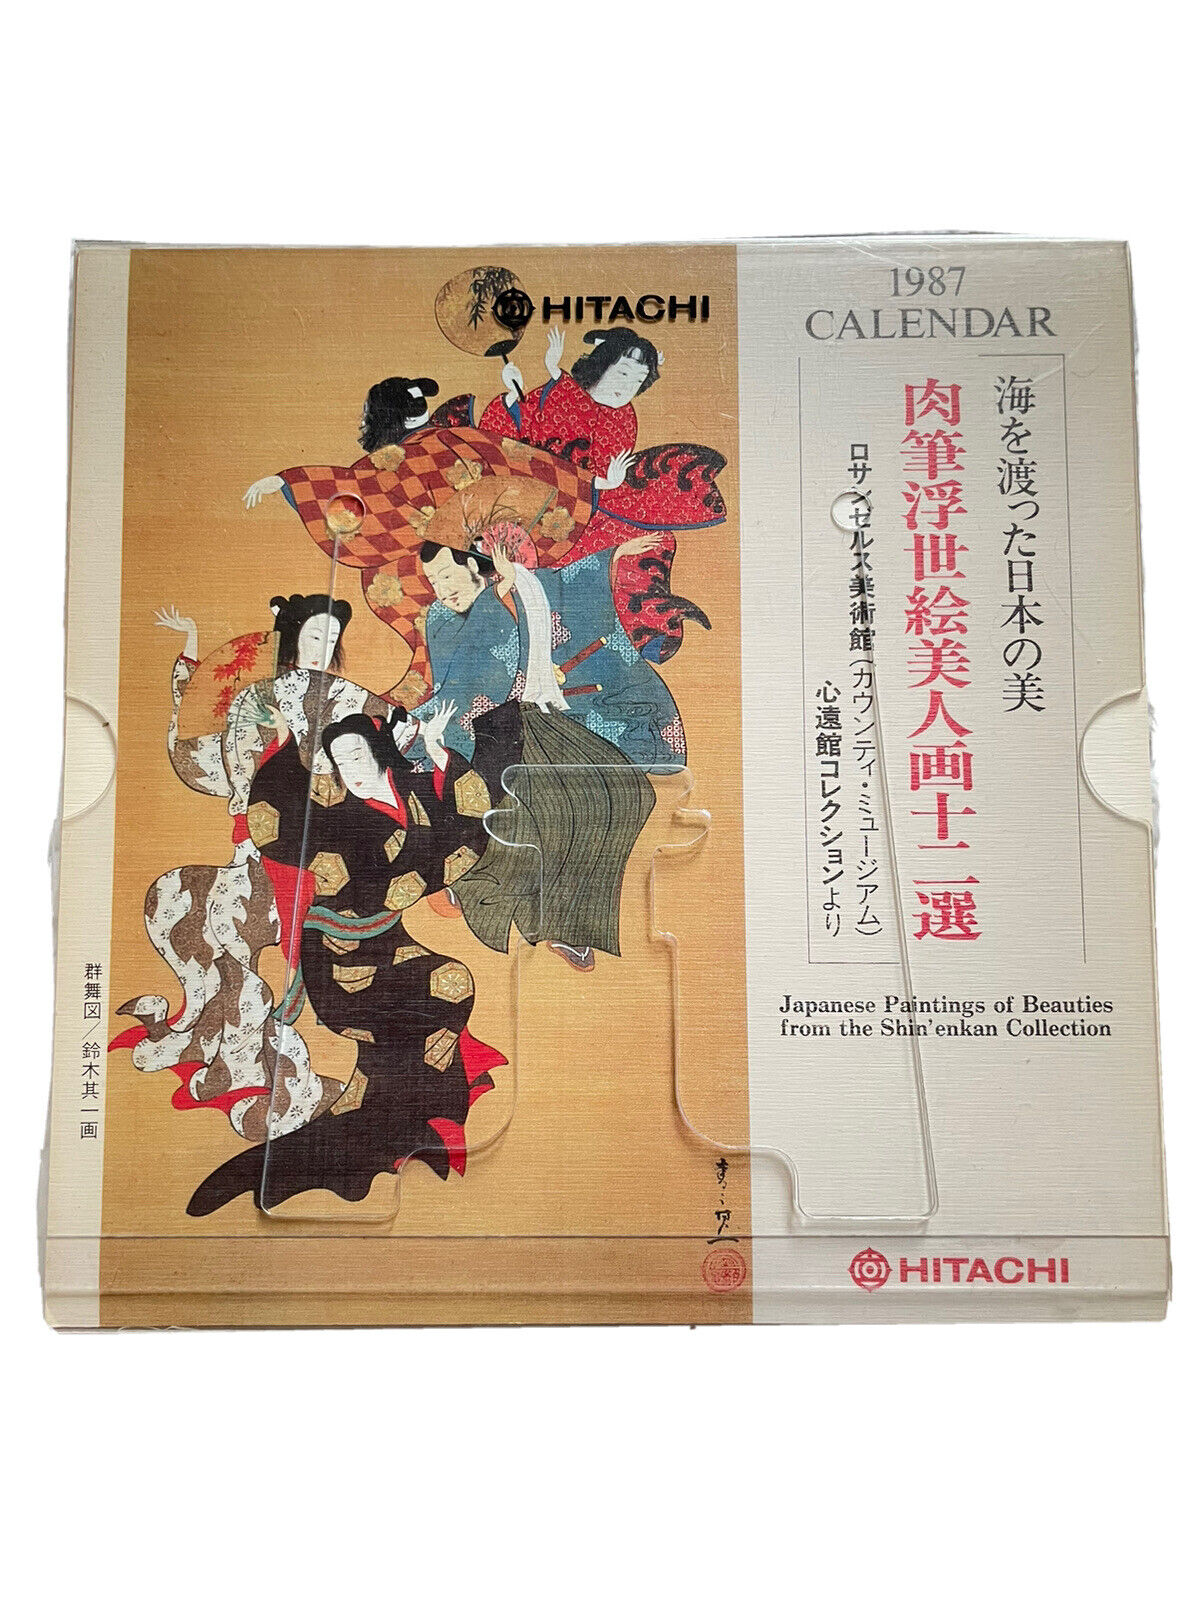 VTG Hitachi 1987 Calendar Japanese Paintings of Beauties Shin’enkan Collection